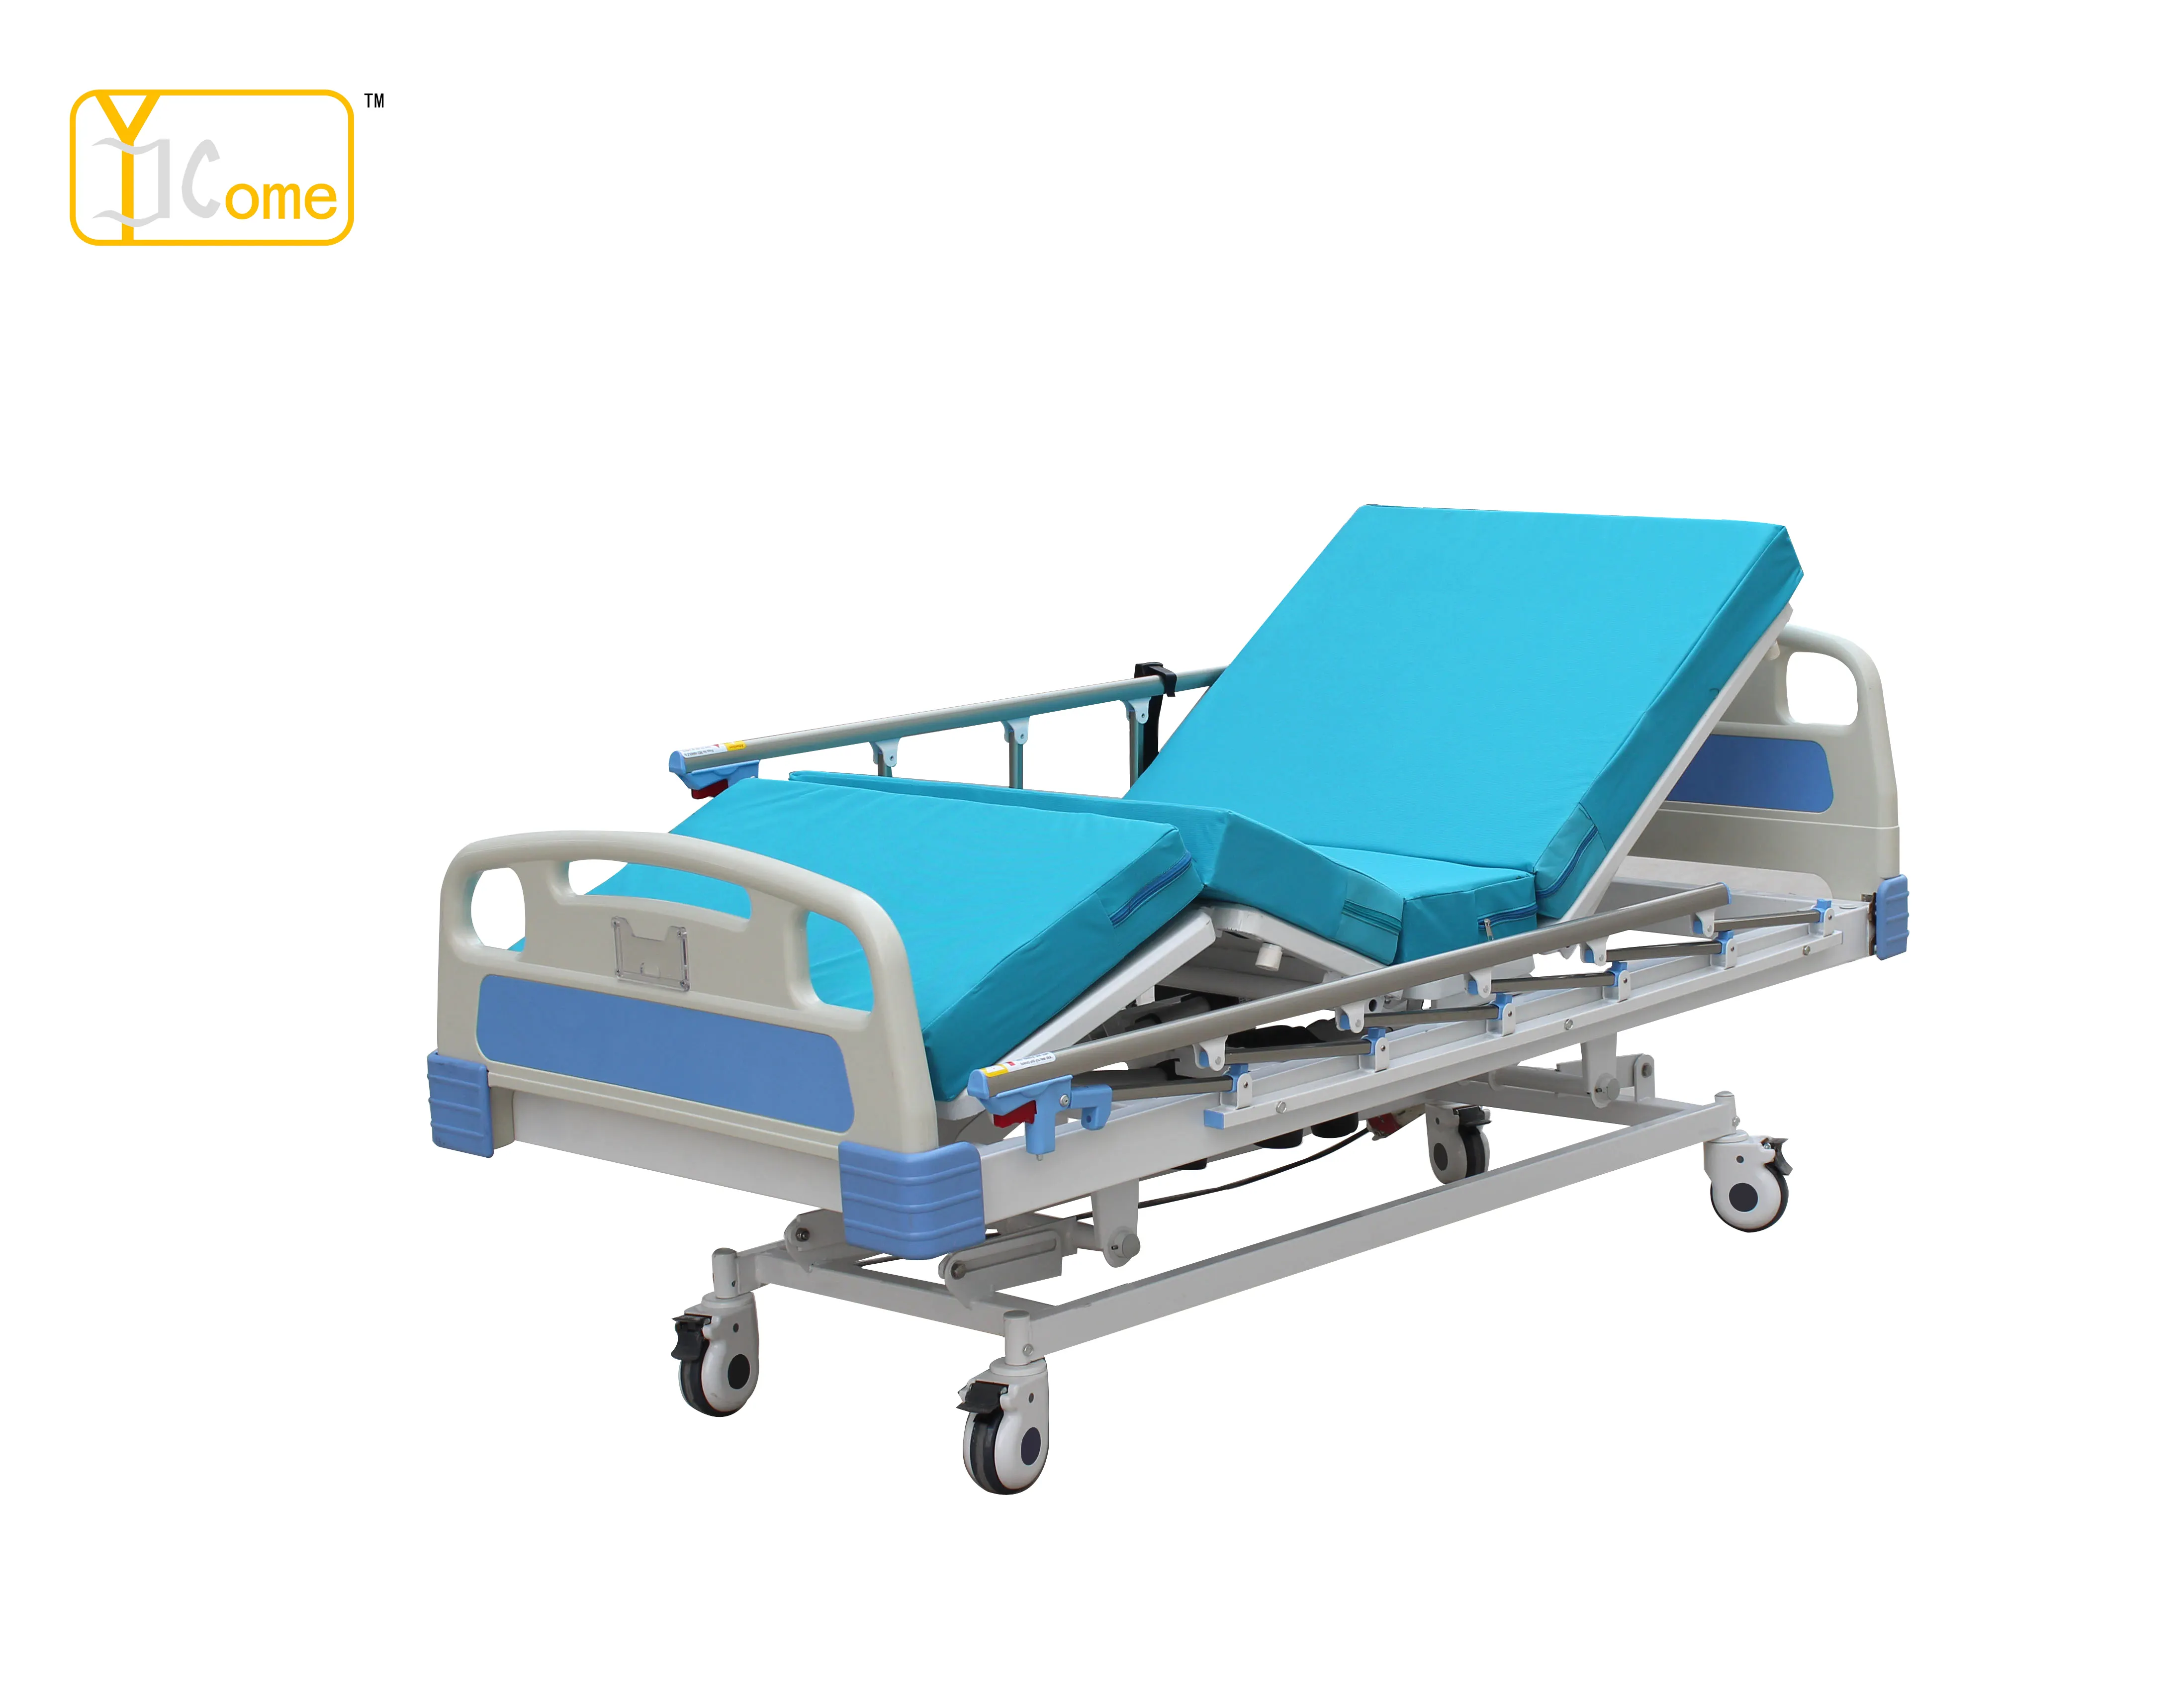 Tempat tidur rumah sakit perawatan rumah YKA004-2 tempat tidur rumah sakit elektrik 5 fungsi tempat tidur multifungsi